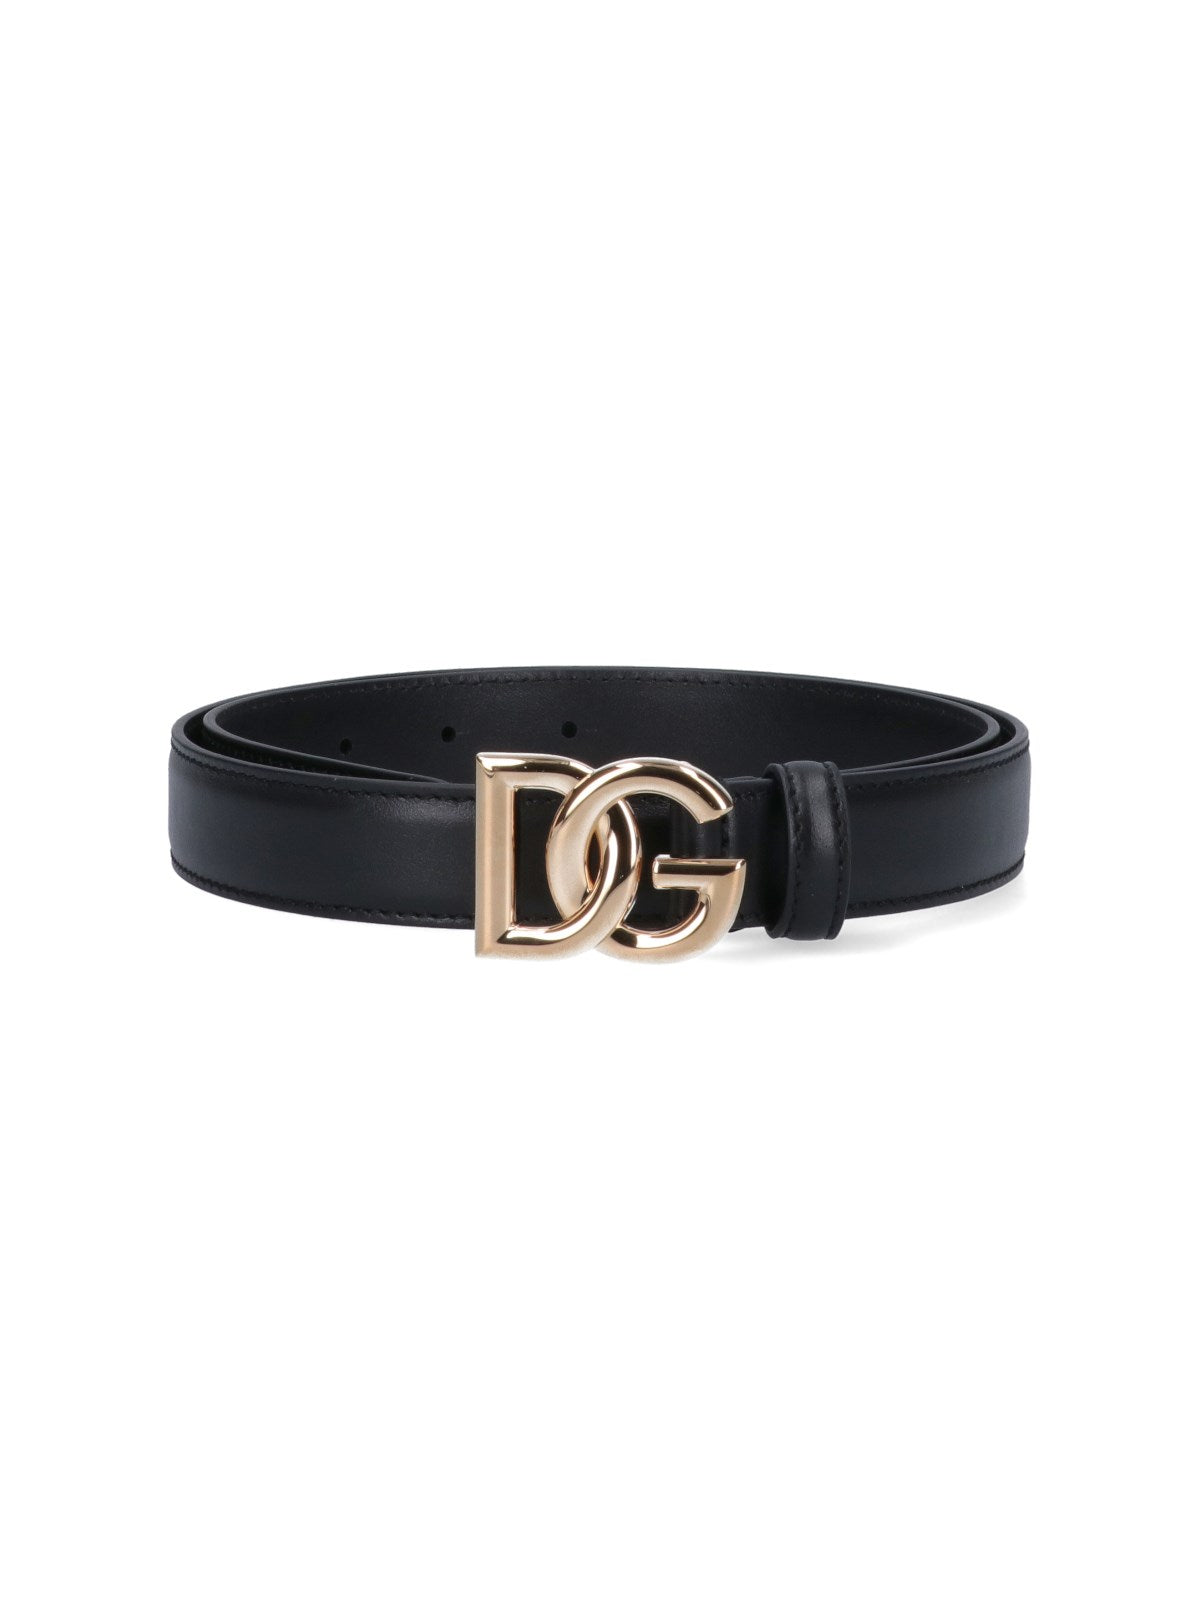 Dolce &amp; Gabbana "DG" belt